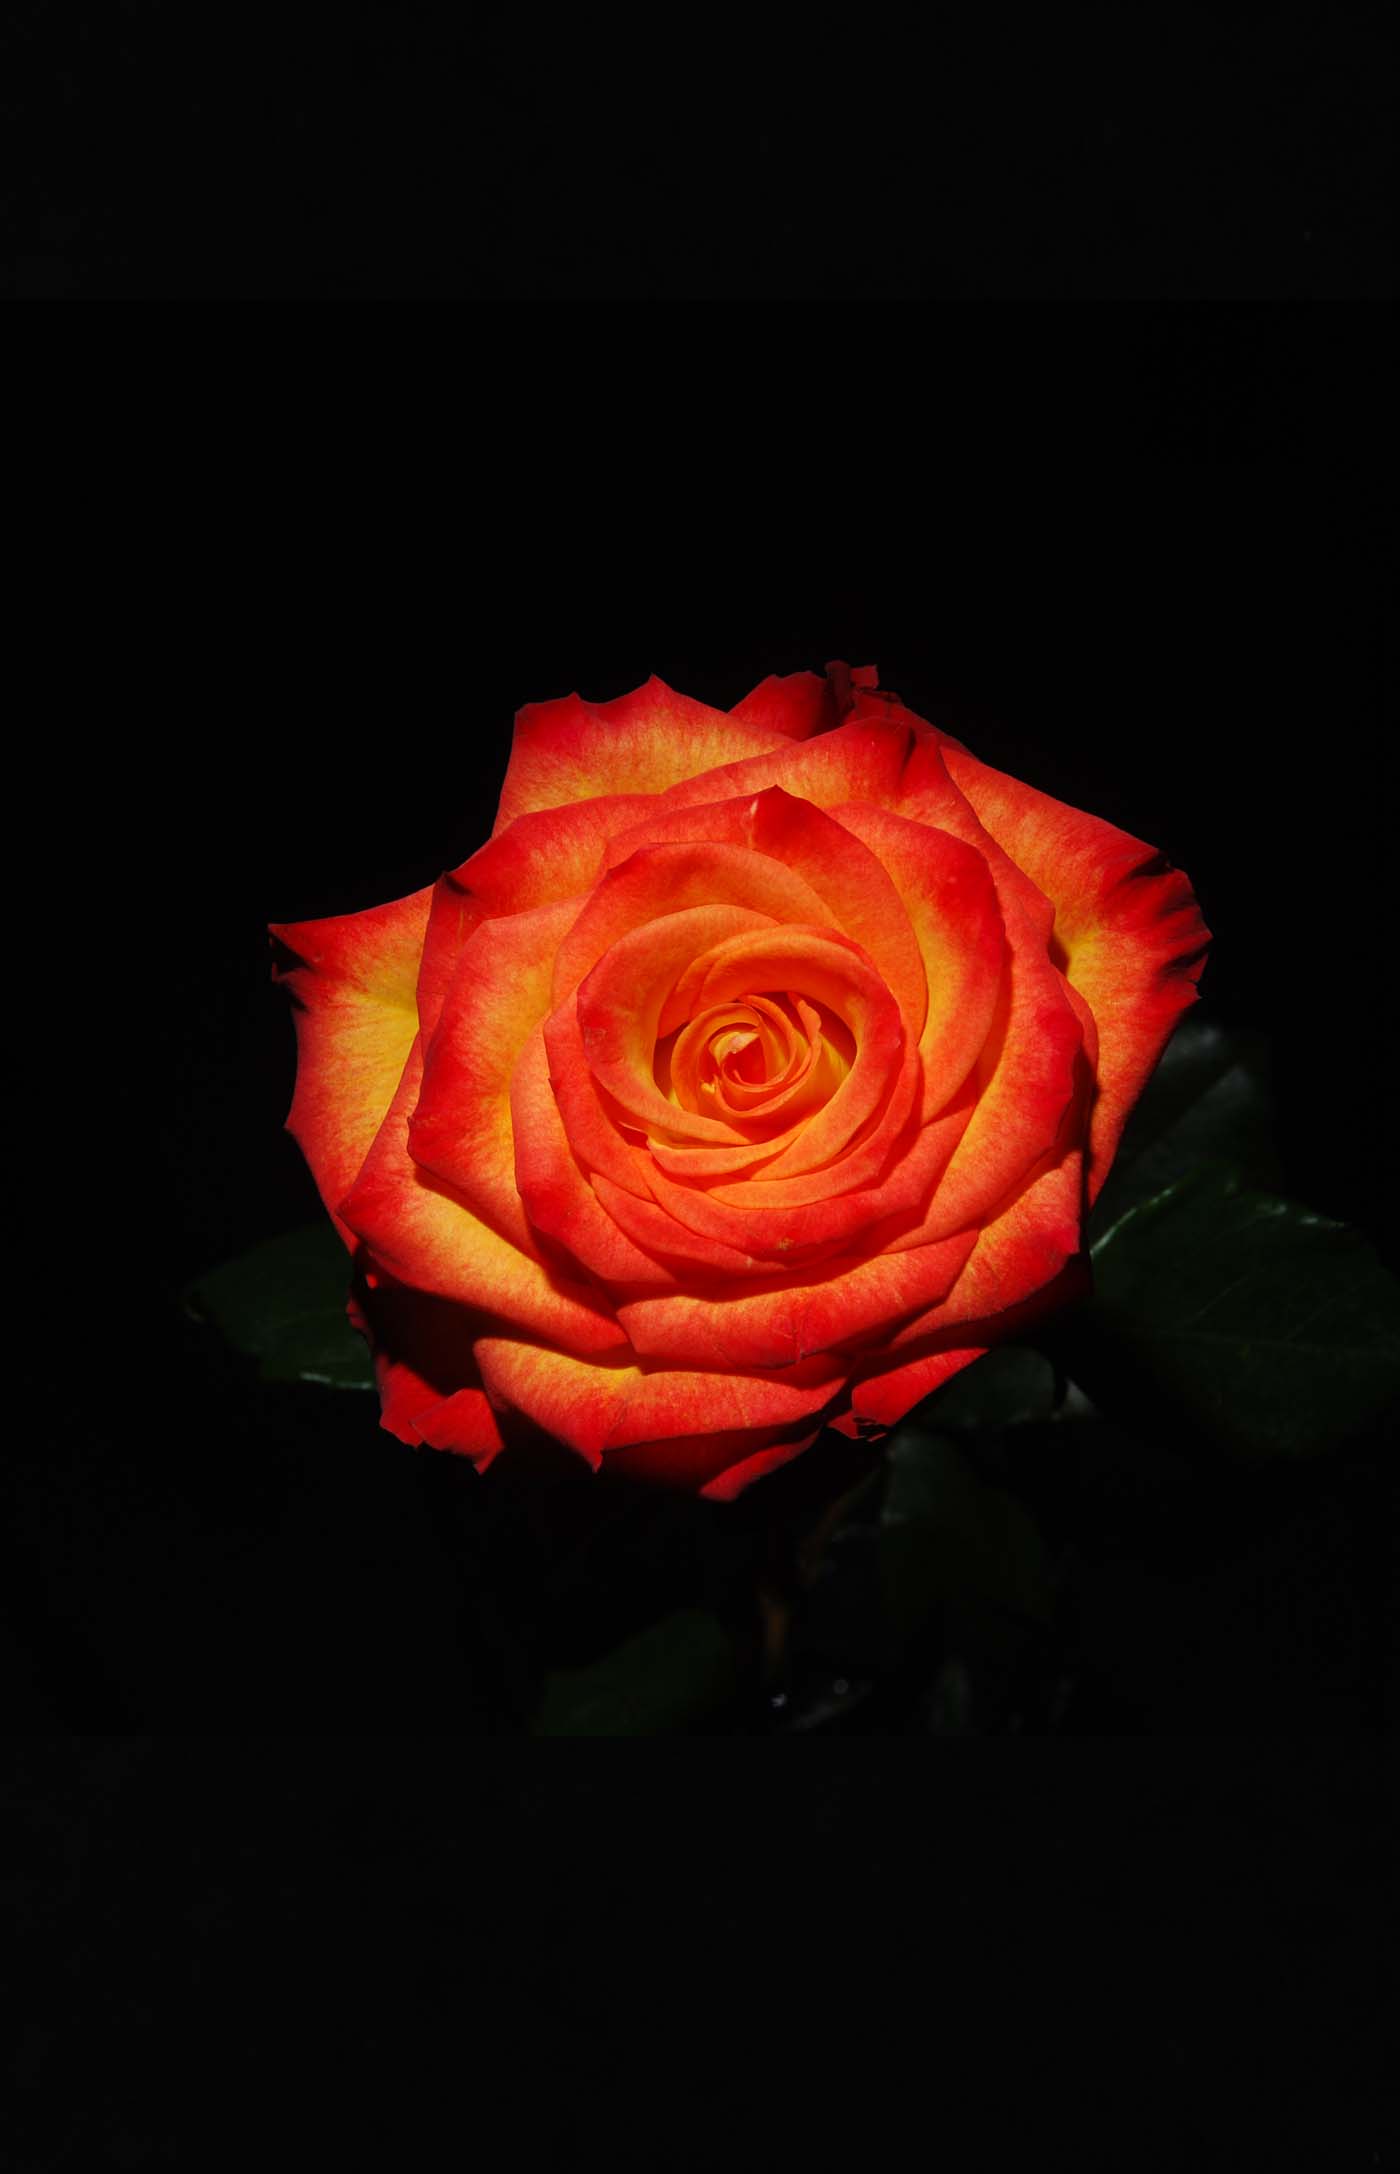 One of the Exquisite and Elegant Bi-Color Roses from Ecuador